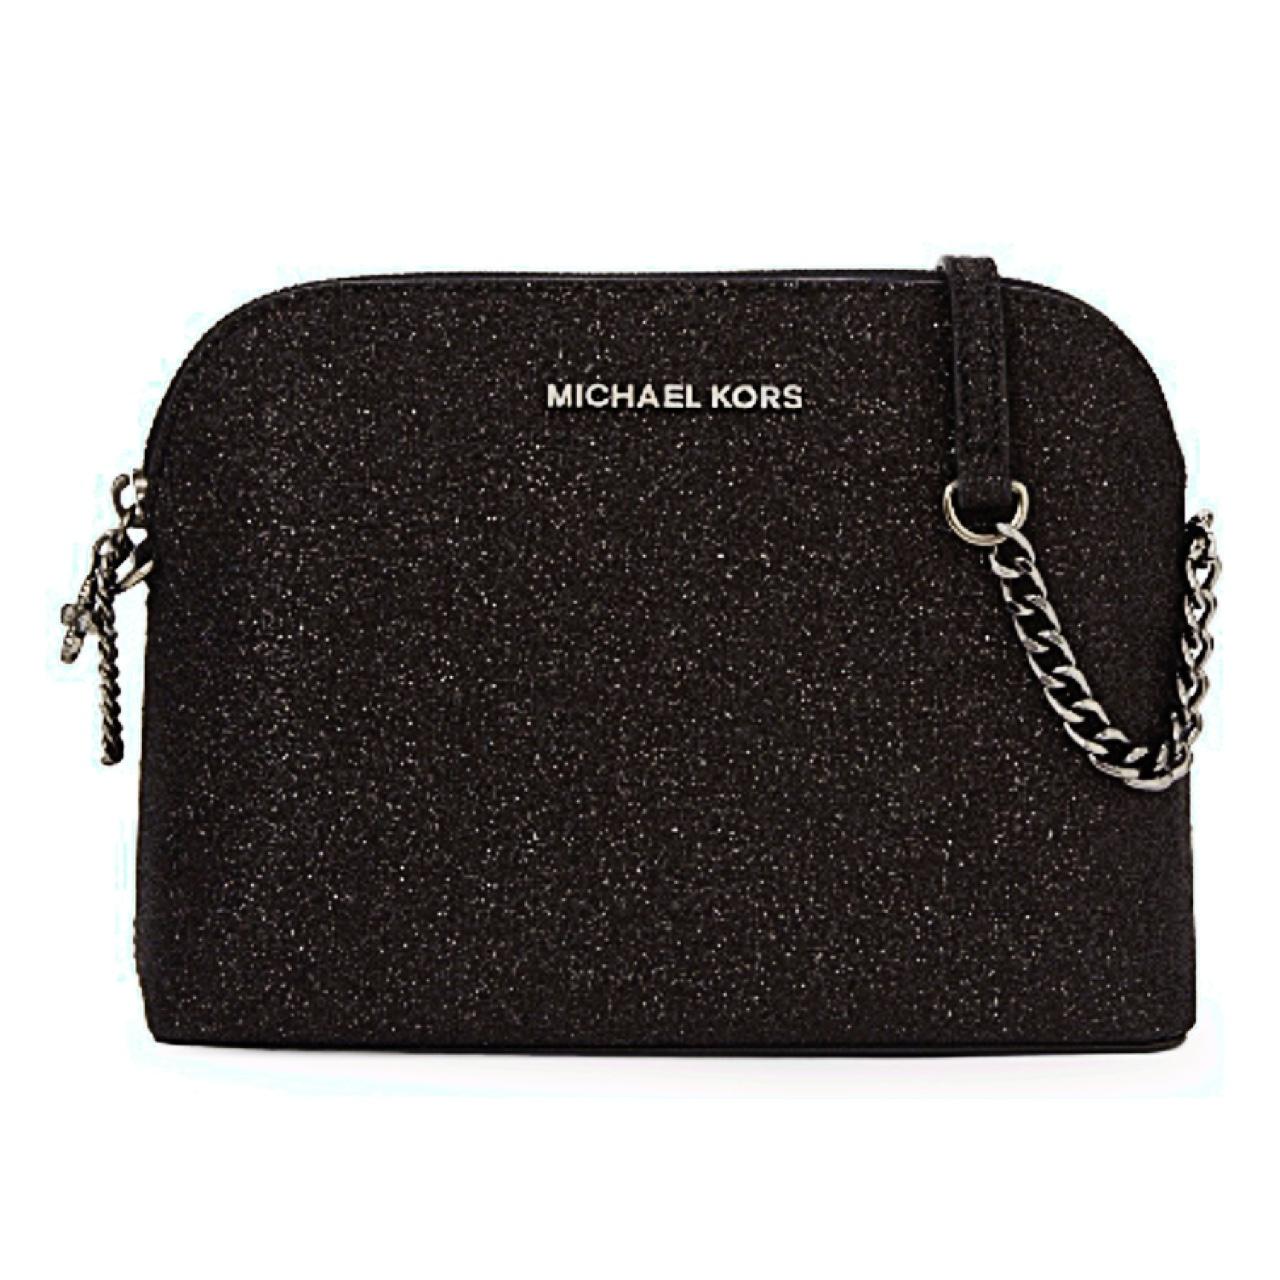 Glitter clutch bag Michael Kors Black in Glitter - 10996404